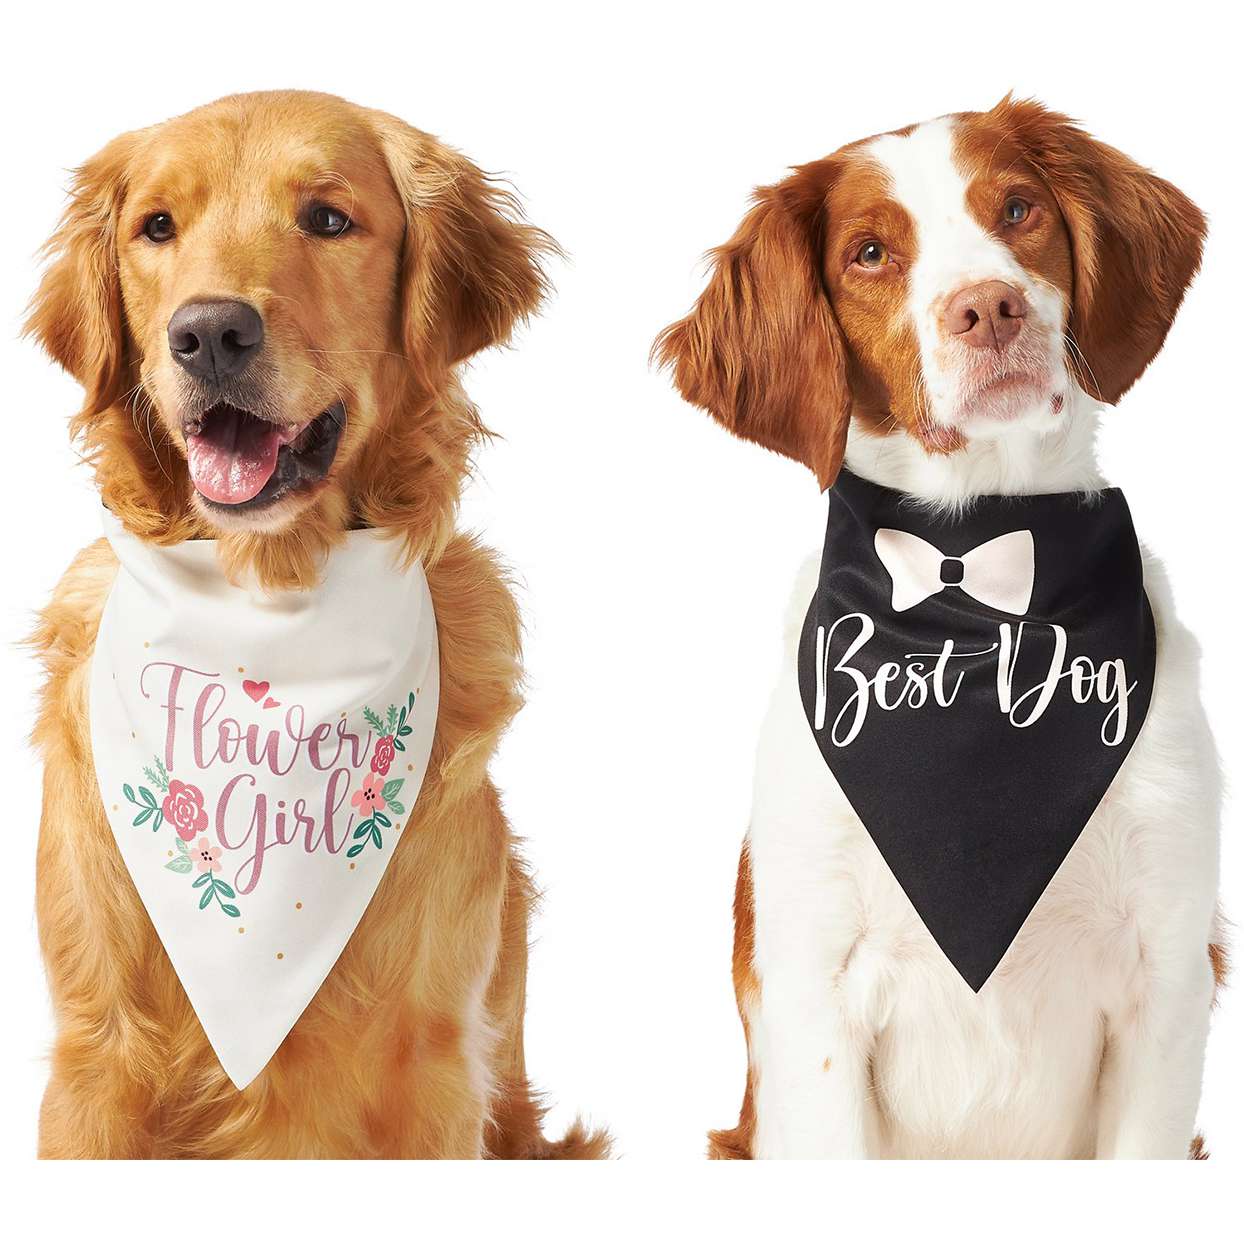 Dog wedding attire bow tie